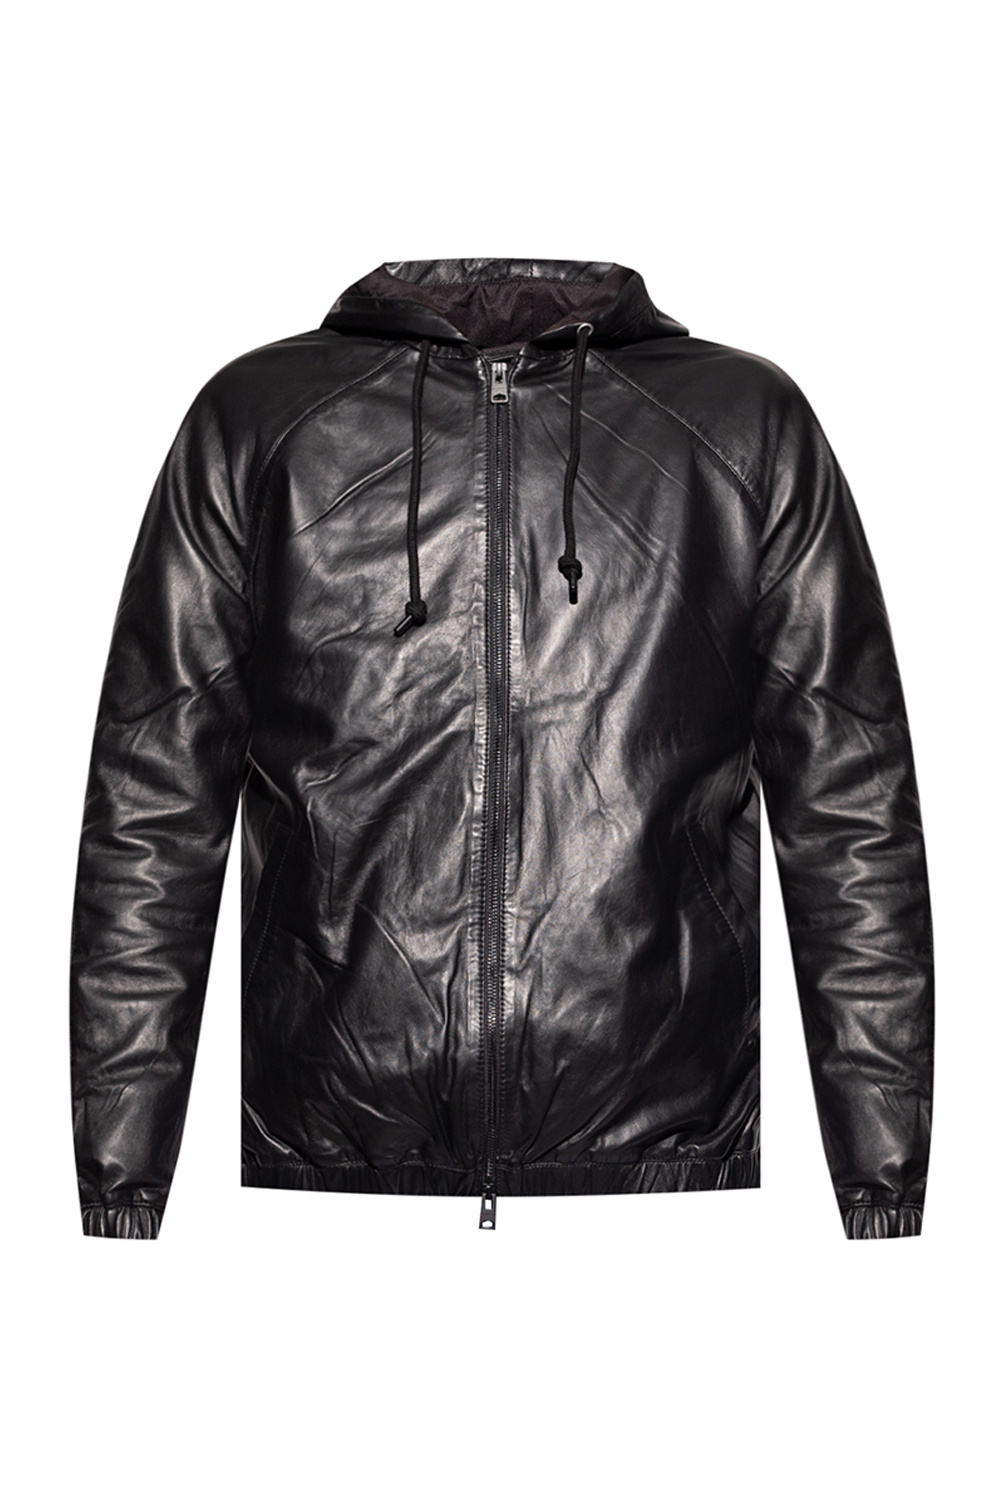 AllSaints ‘Penton’ hooded leather jacket